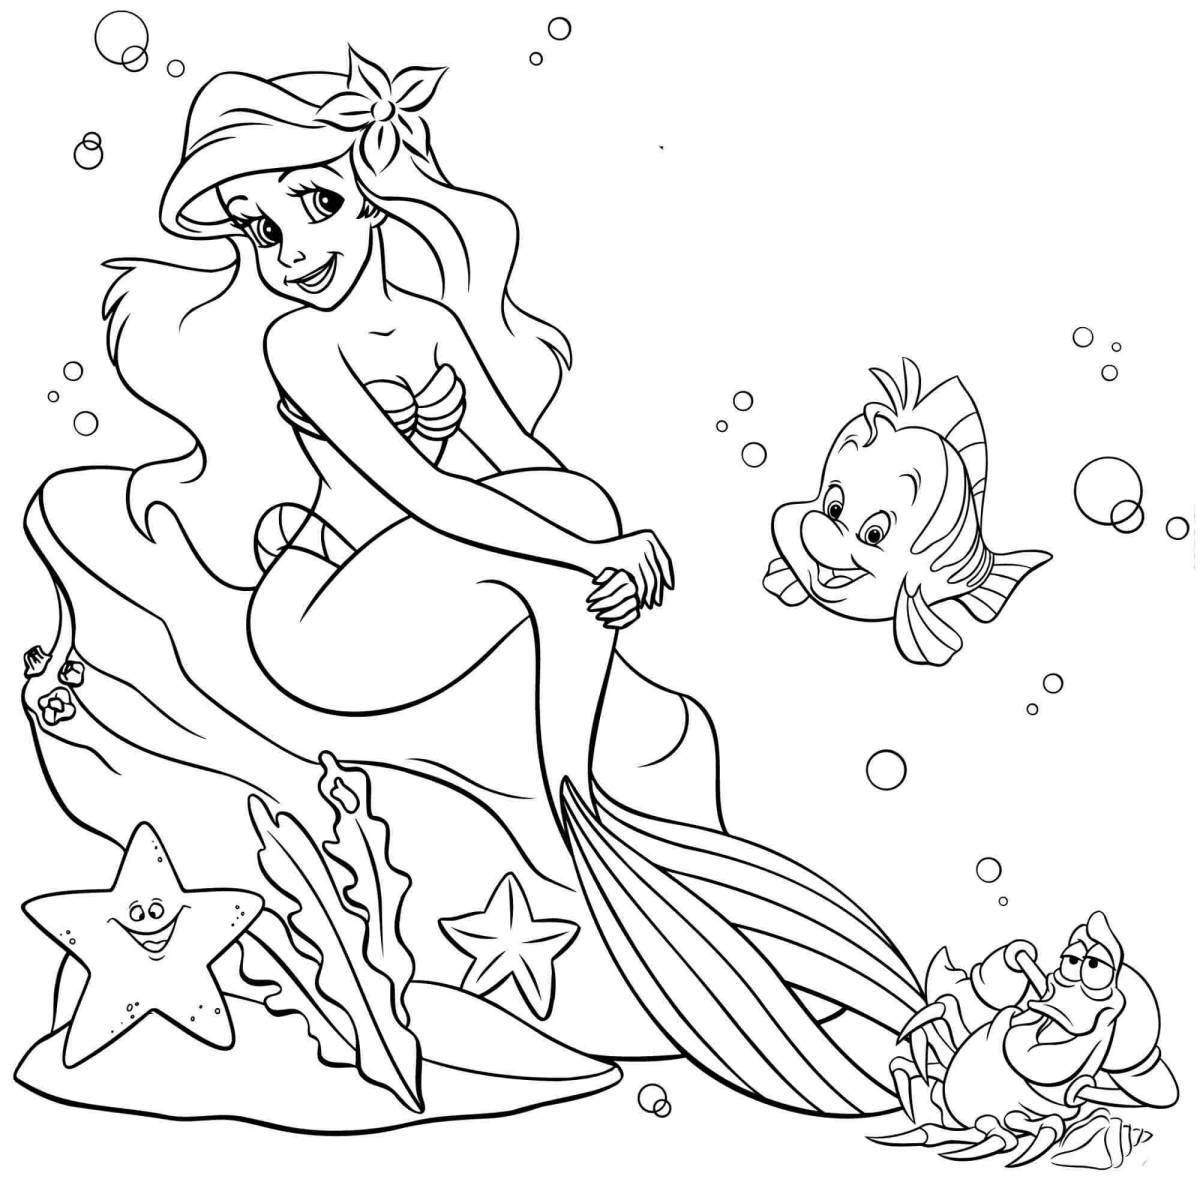 Fun little mermaid coloring book